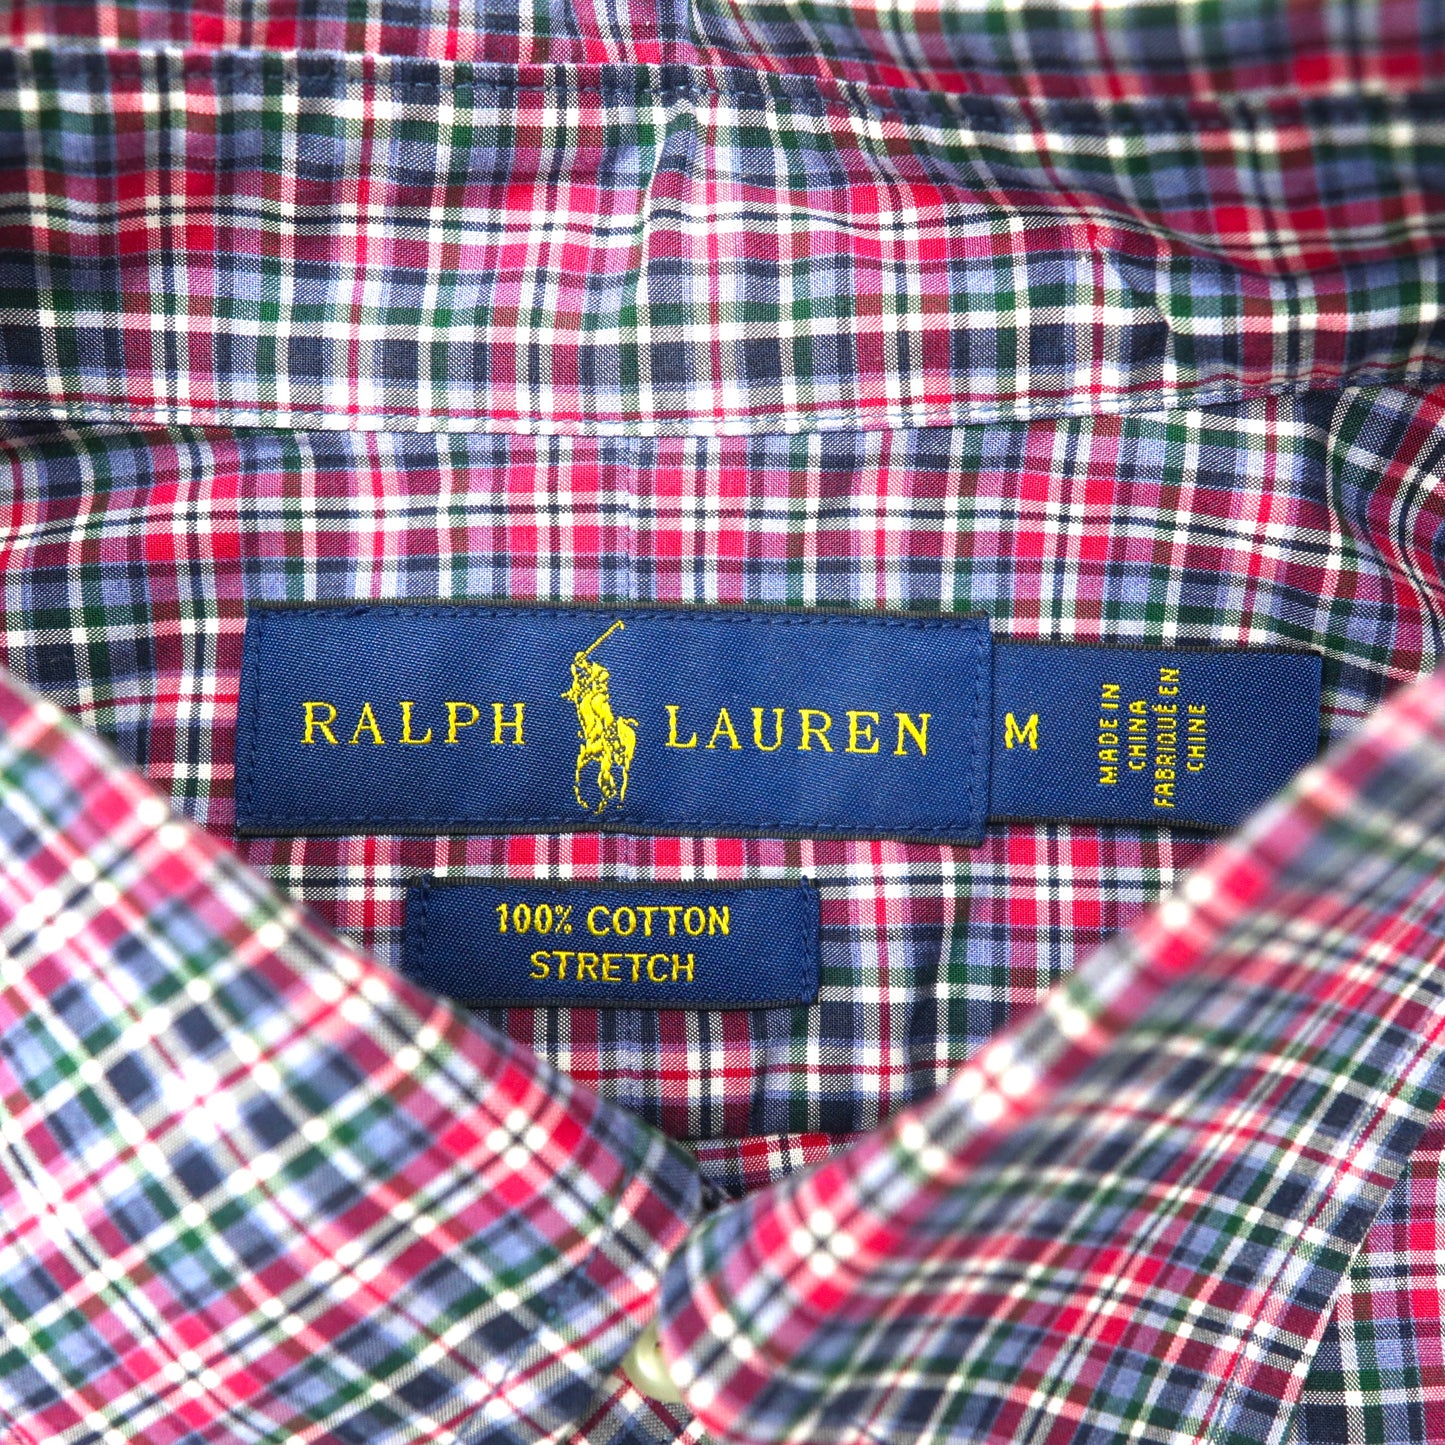 RALPH LAUREN ボタンダウンシャツ M ブルー レッド チェック コットン ストレッチ スモールポニー刺繍